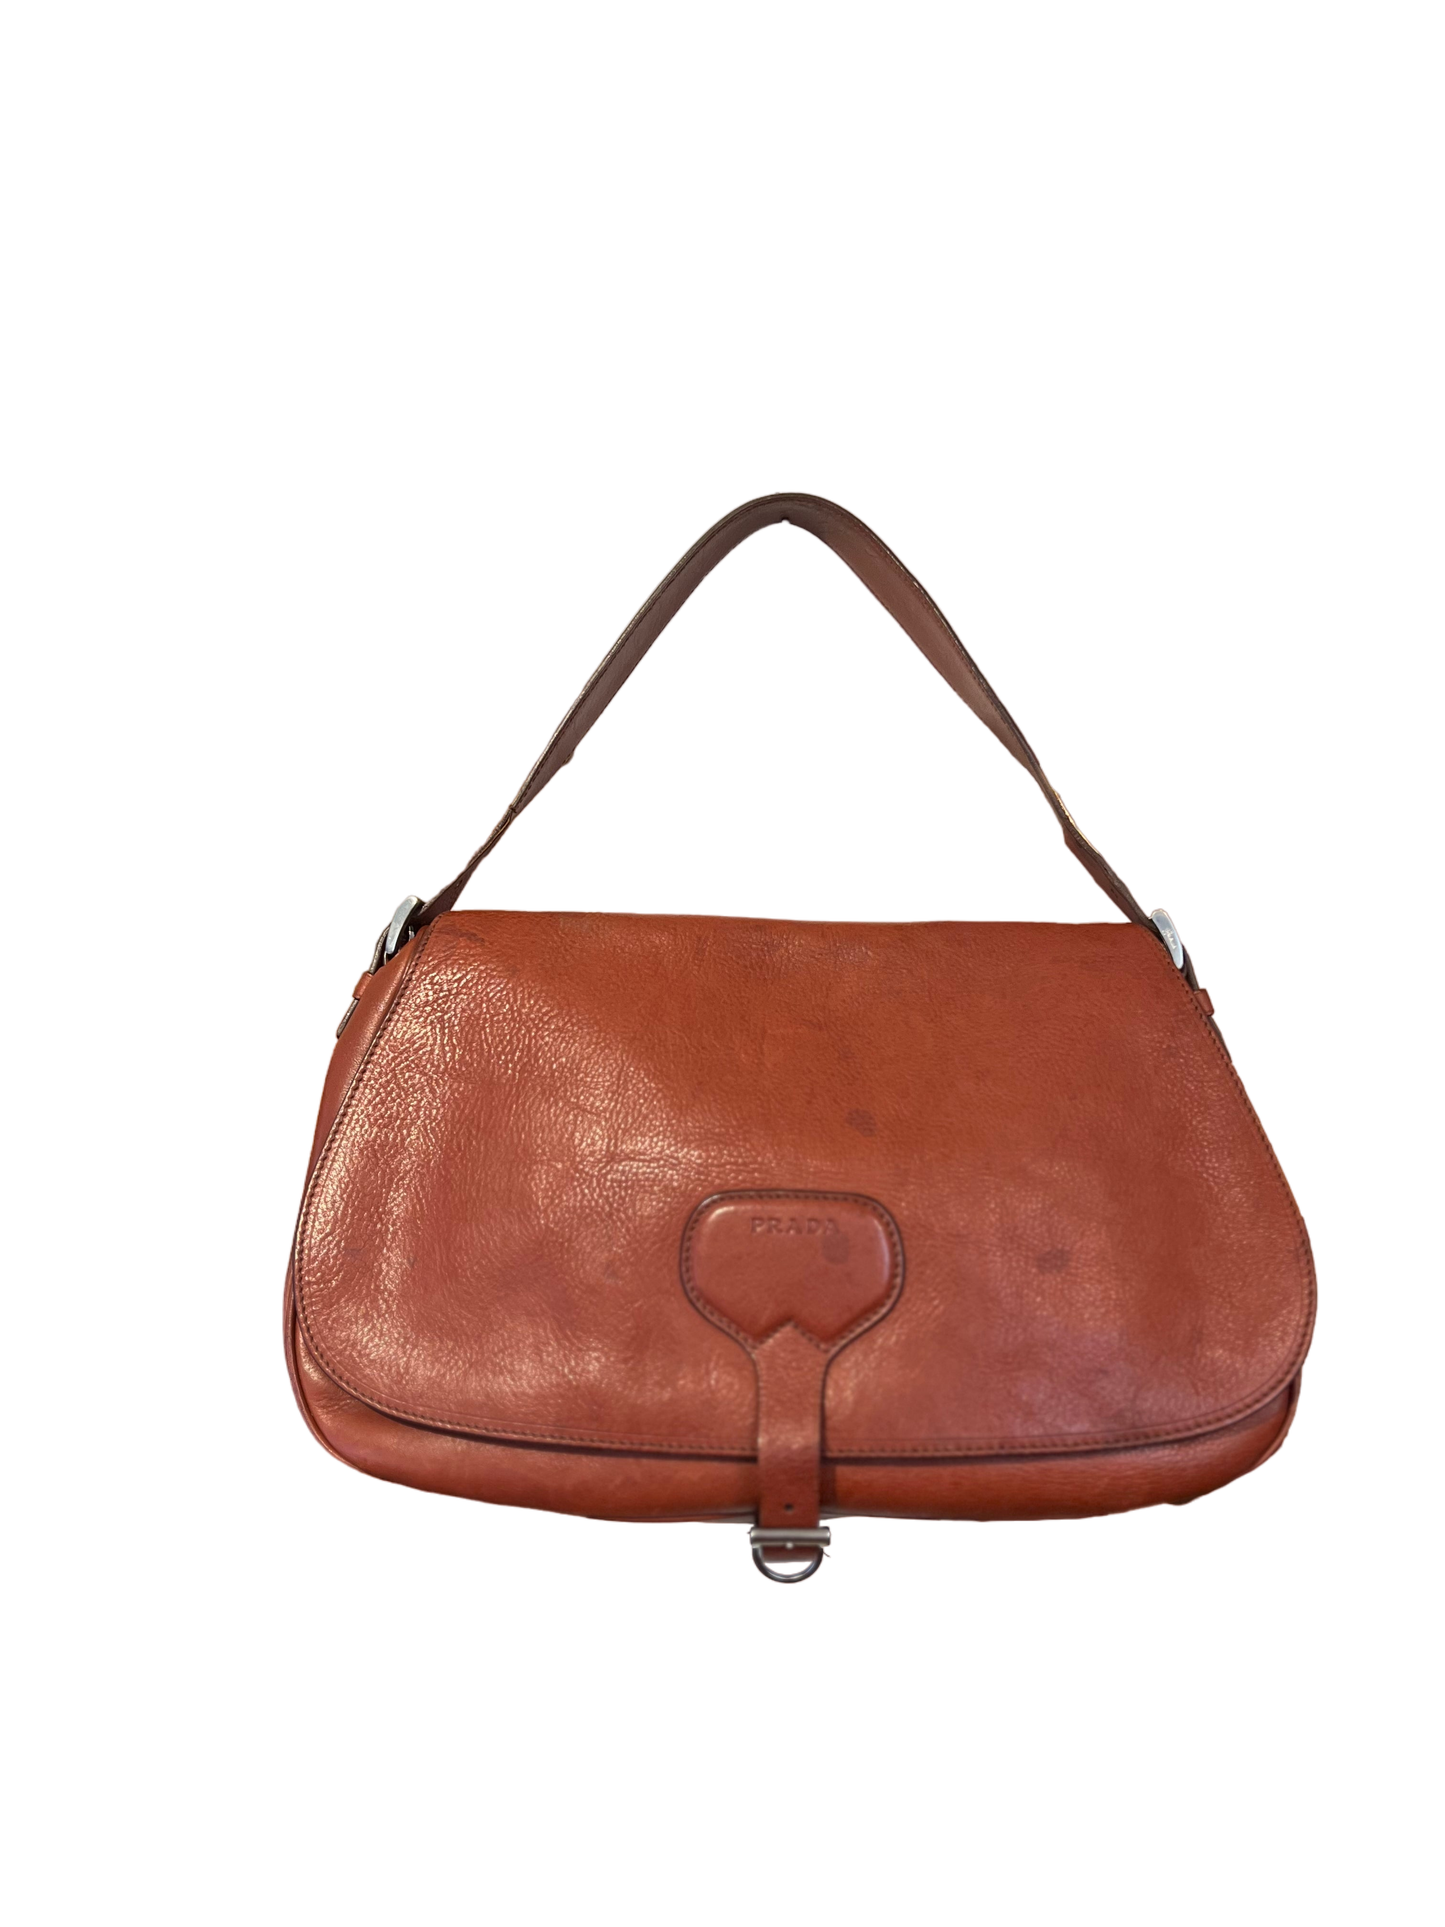 Prada Distressed Leather Shoulder Bag *Runway*